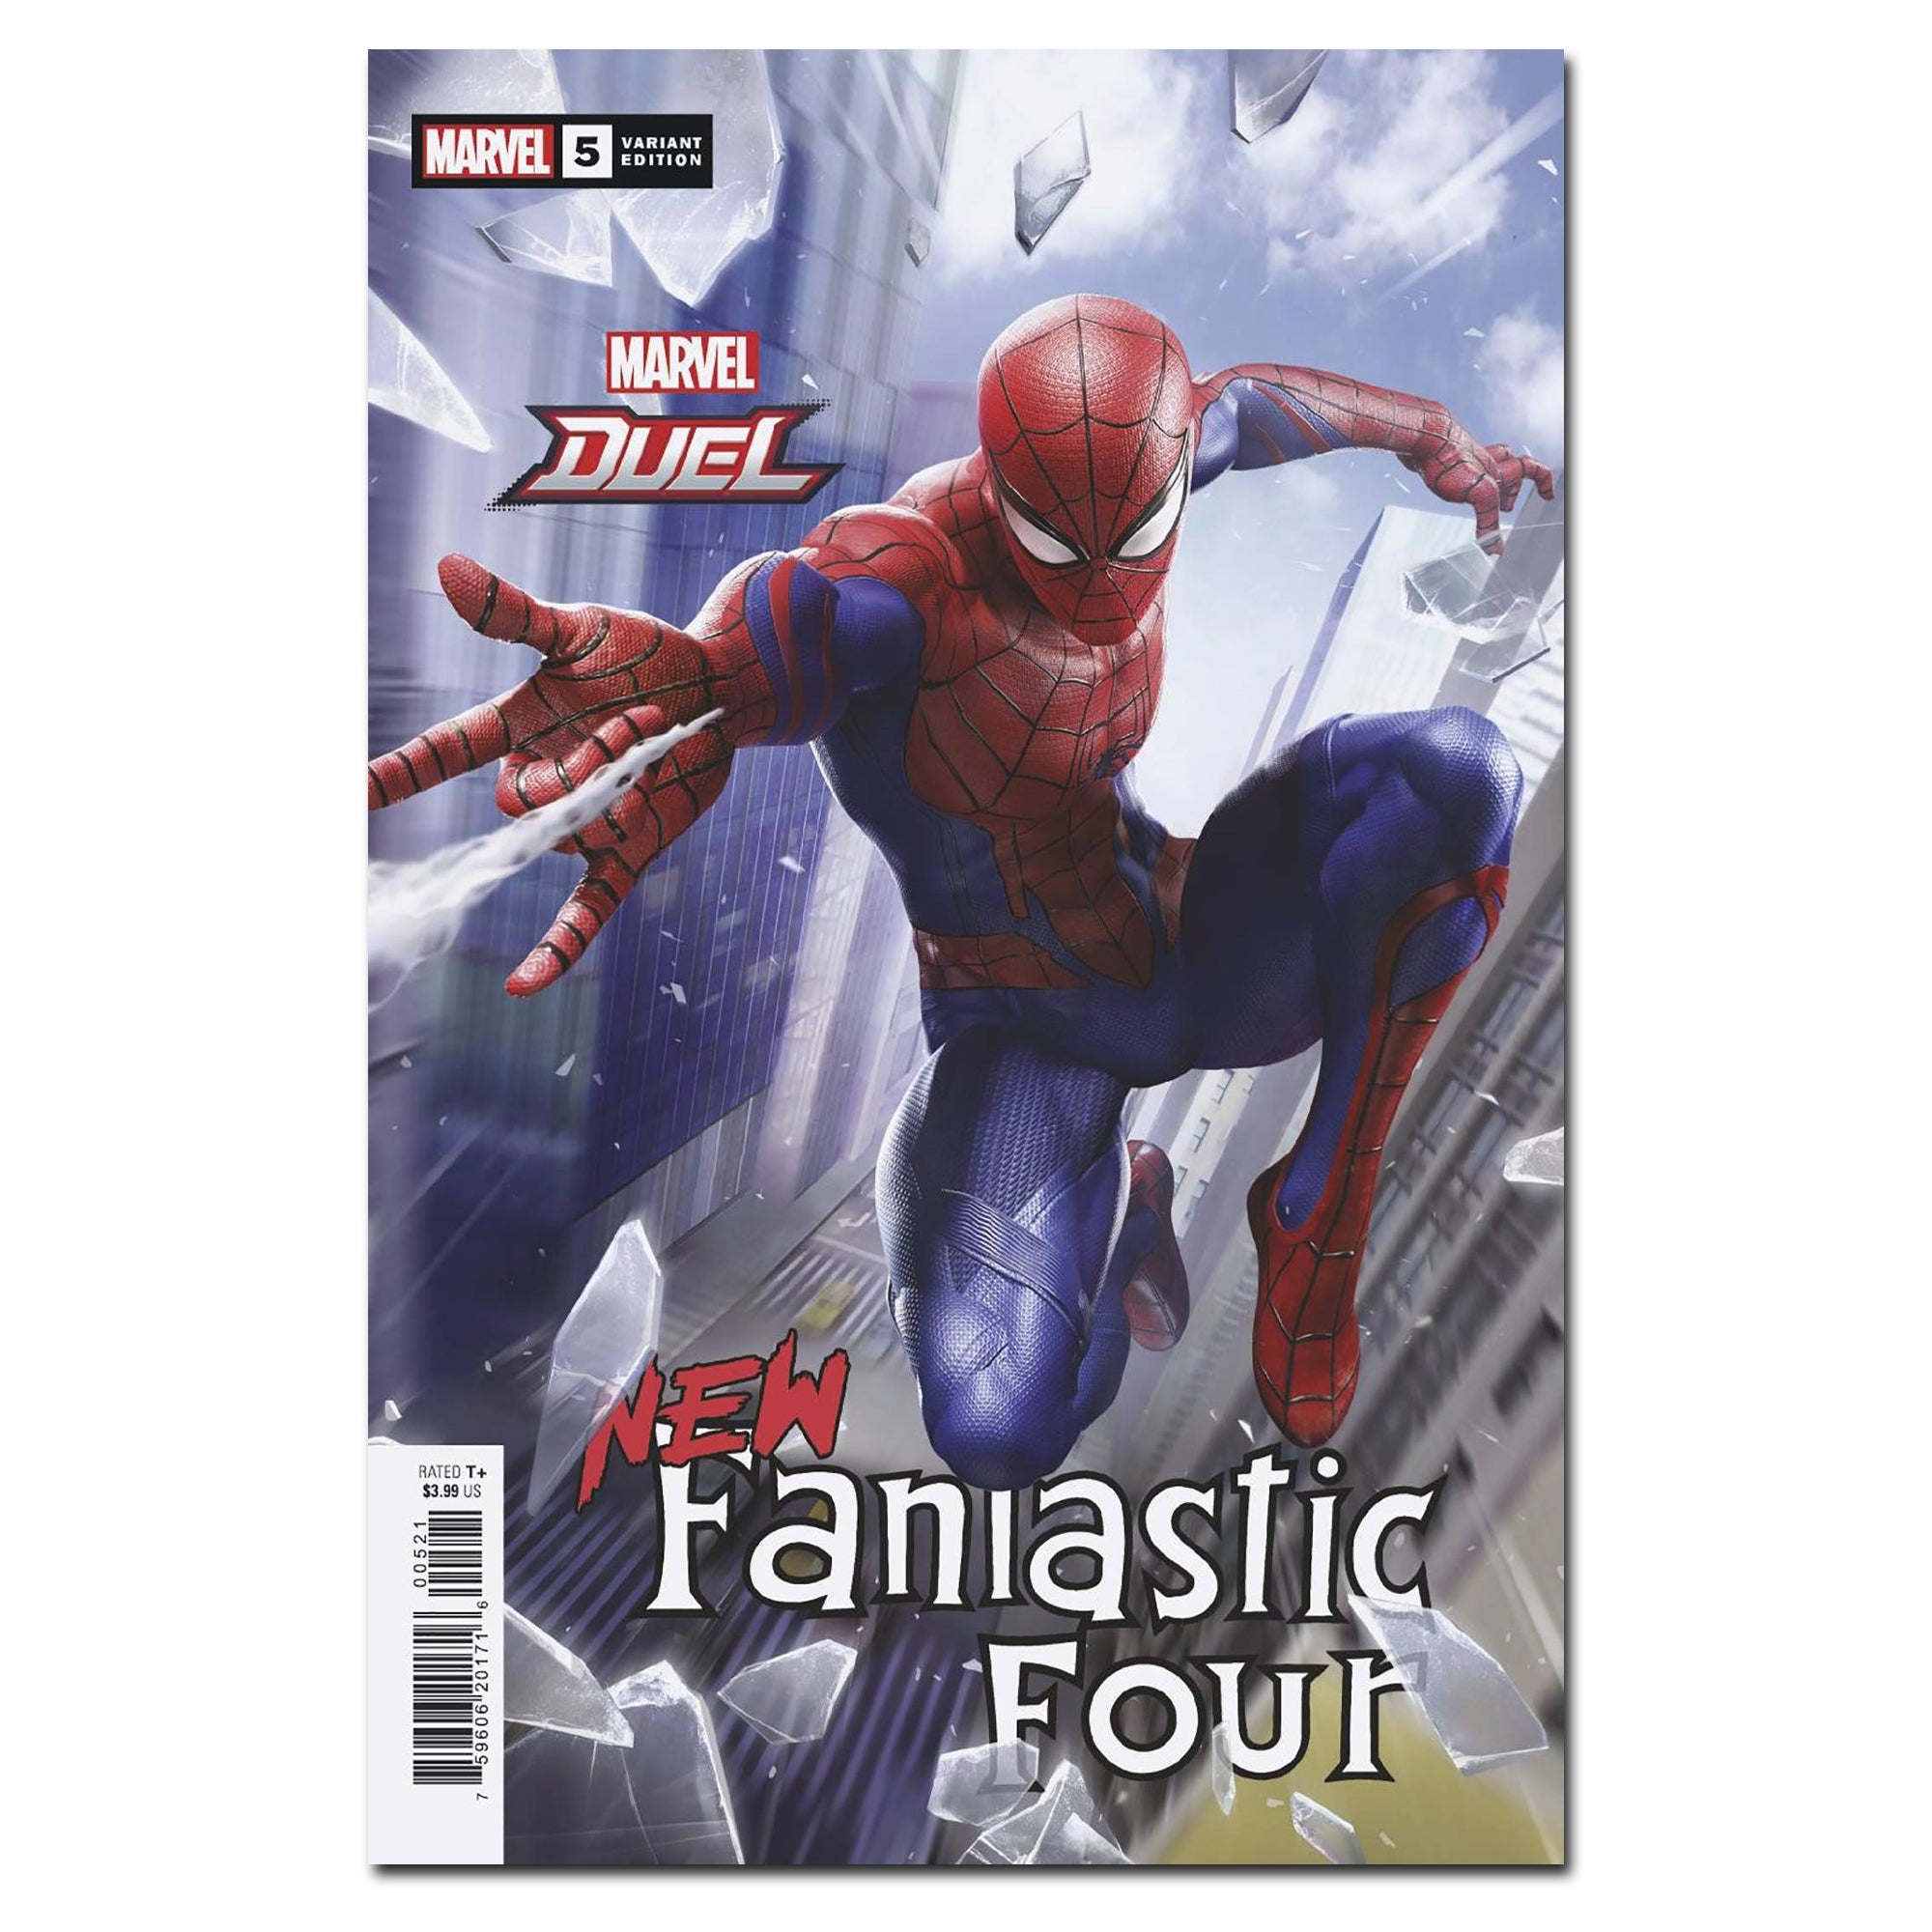 New Fantastic Four #5 (of 5) Cover Variant NETEASE FINALSALE